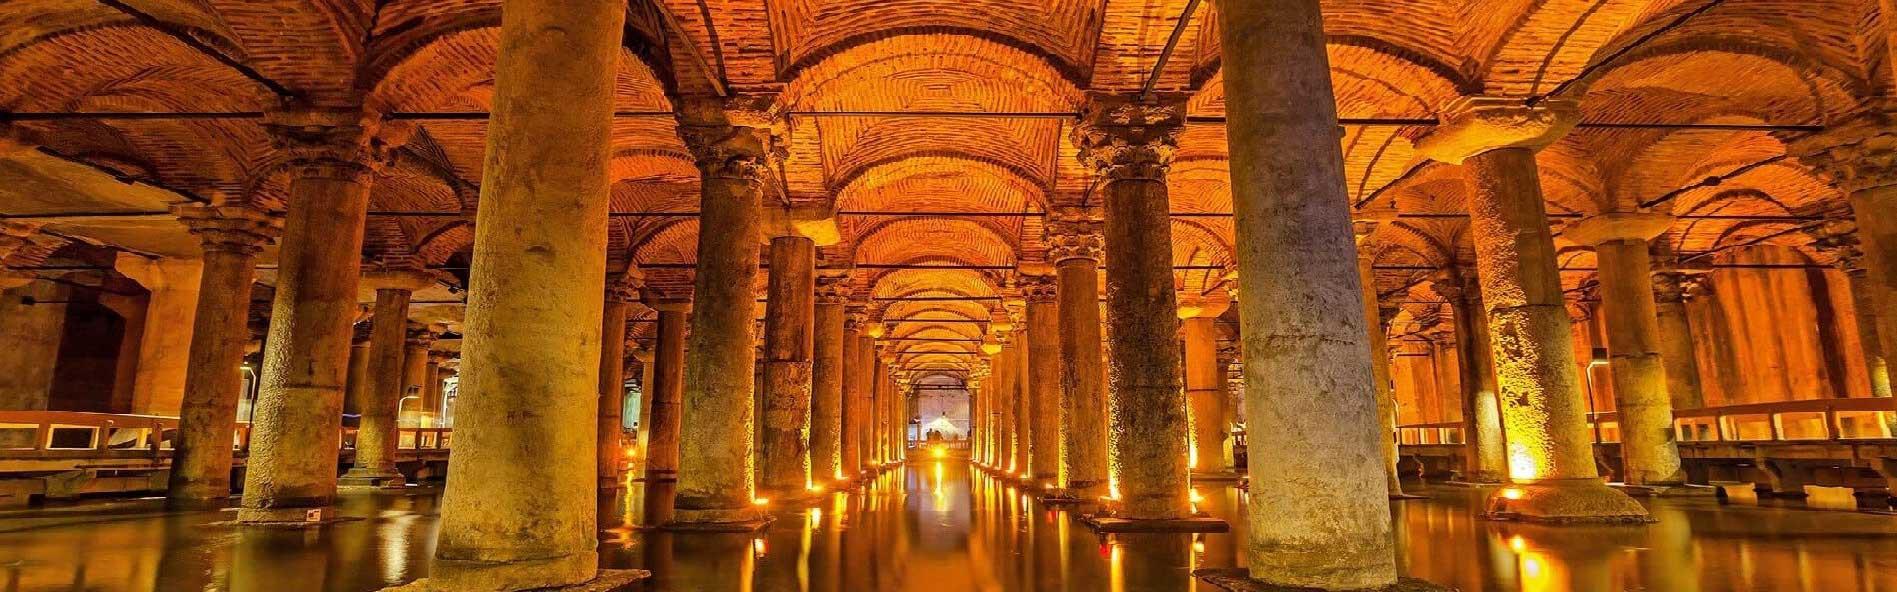 آب انبار باسیلیکا استانبول Basilica cistern Istanbul